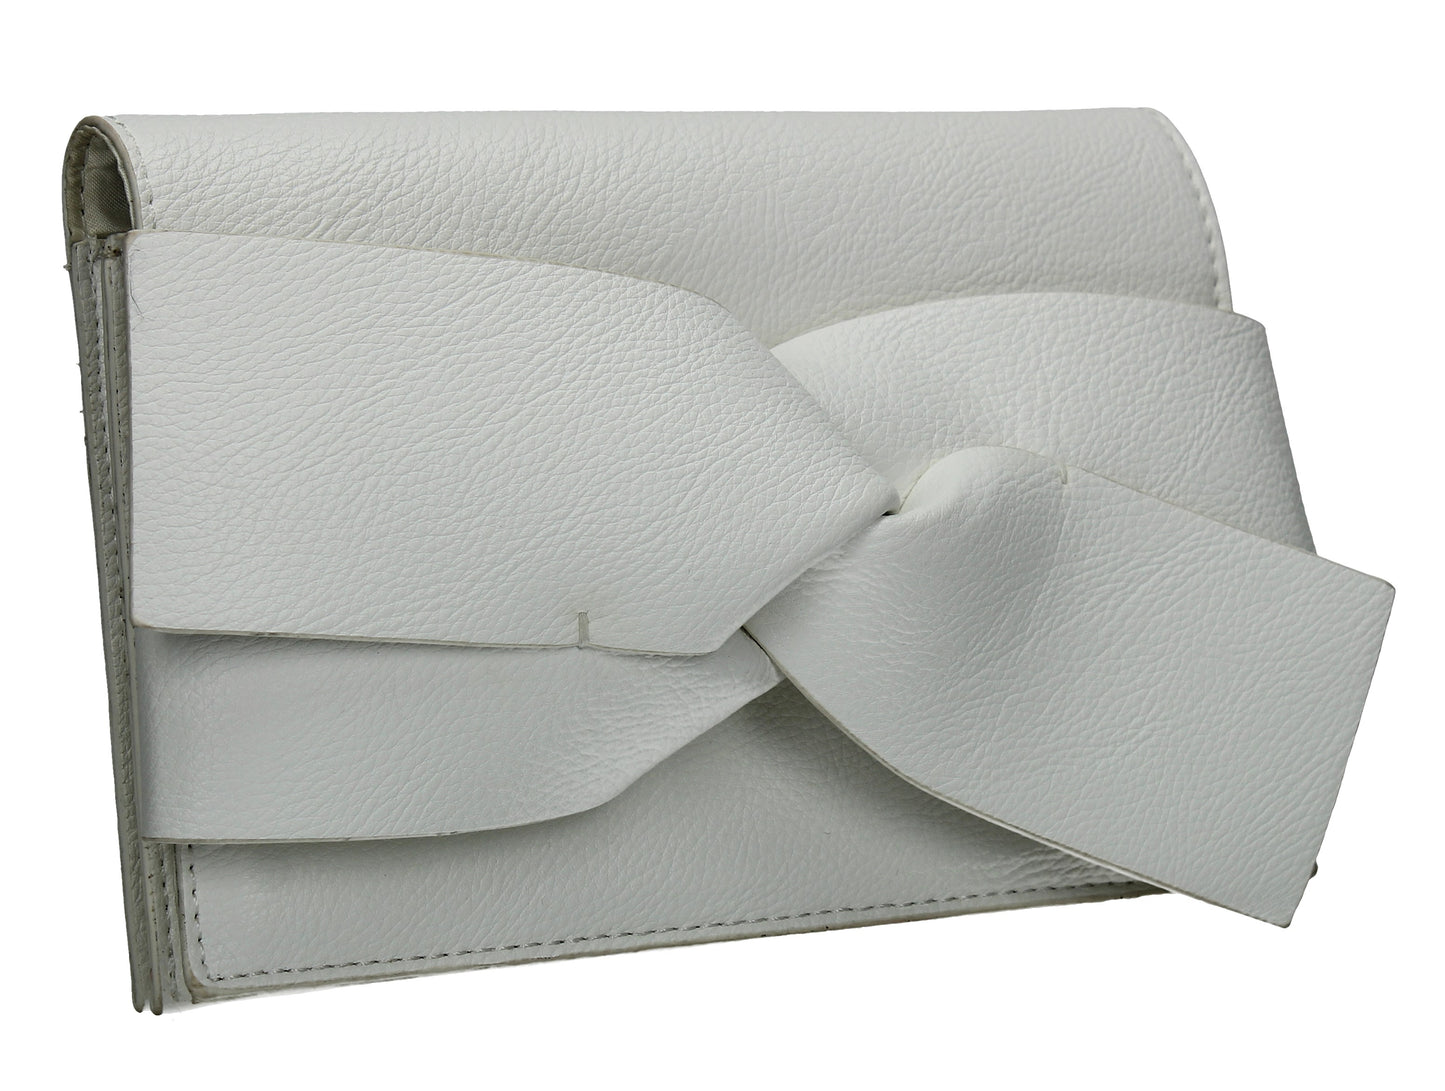 SWANKYSWANS Kira Bow Detail Clutch Bag White Cute Cheap Clutch Bag For Weddings School and Work